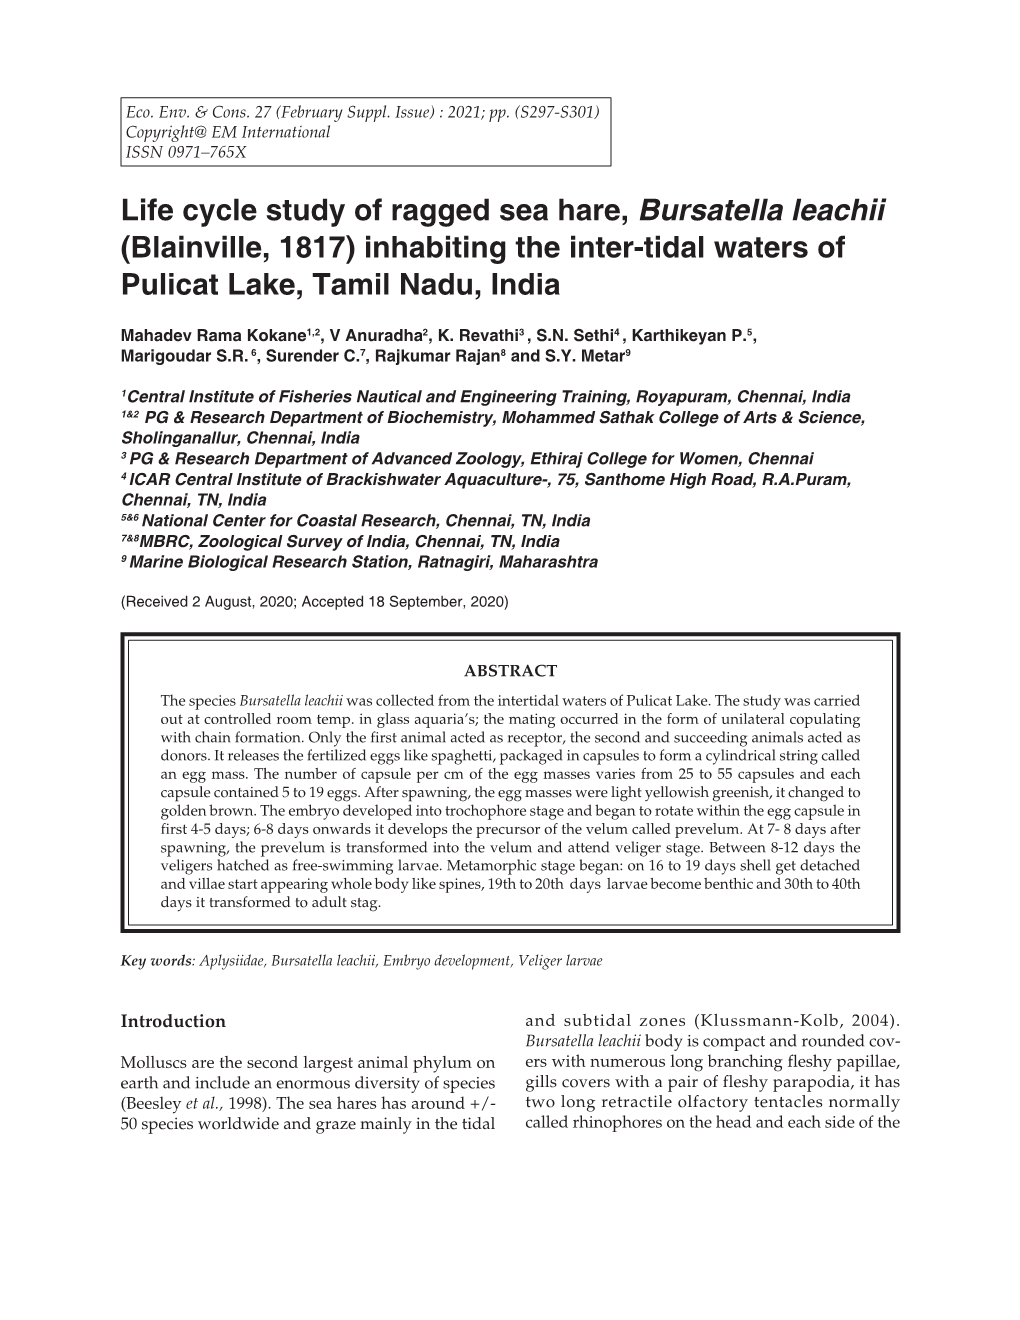 Life Cycle Study of Ragged Sea Hare, Bursatella Leachii (Blainville, 1817) Inhabiting the Inter-Tidal Waters of Pulicat Lake, Tamil Nadu, India